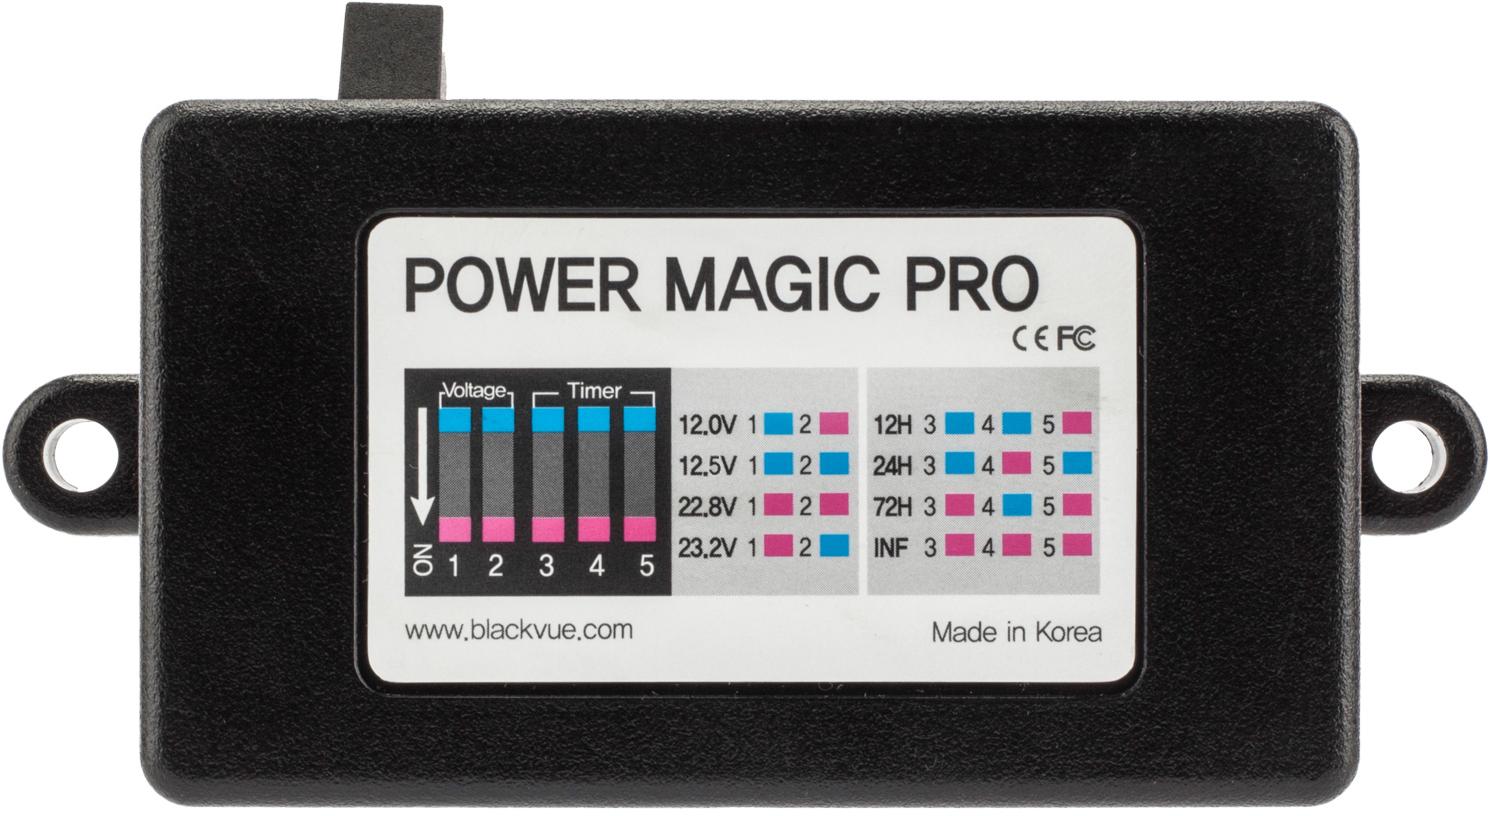 Blackvue Power Magic Pro